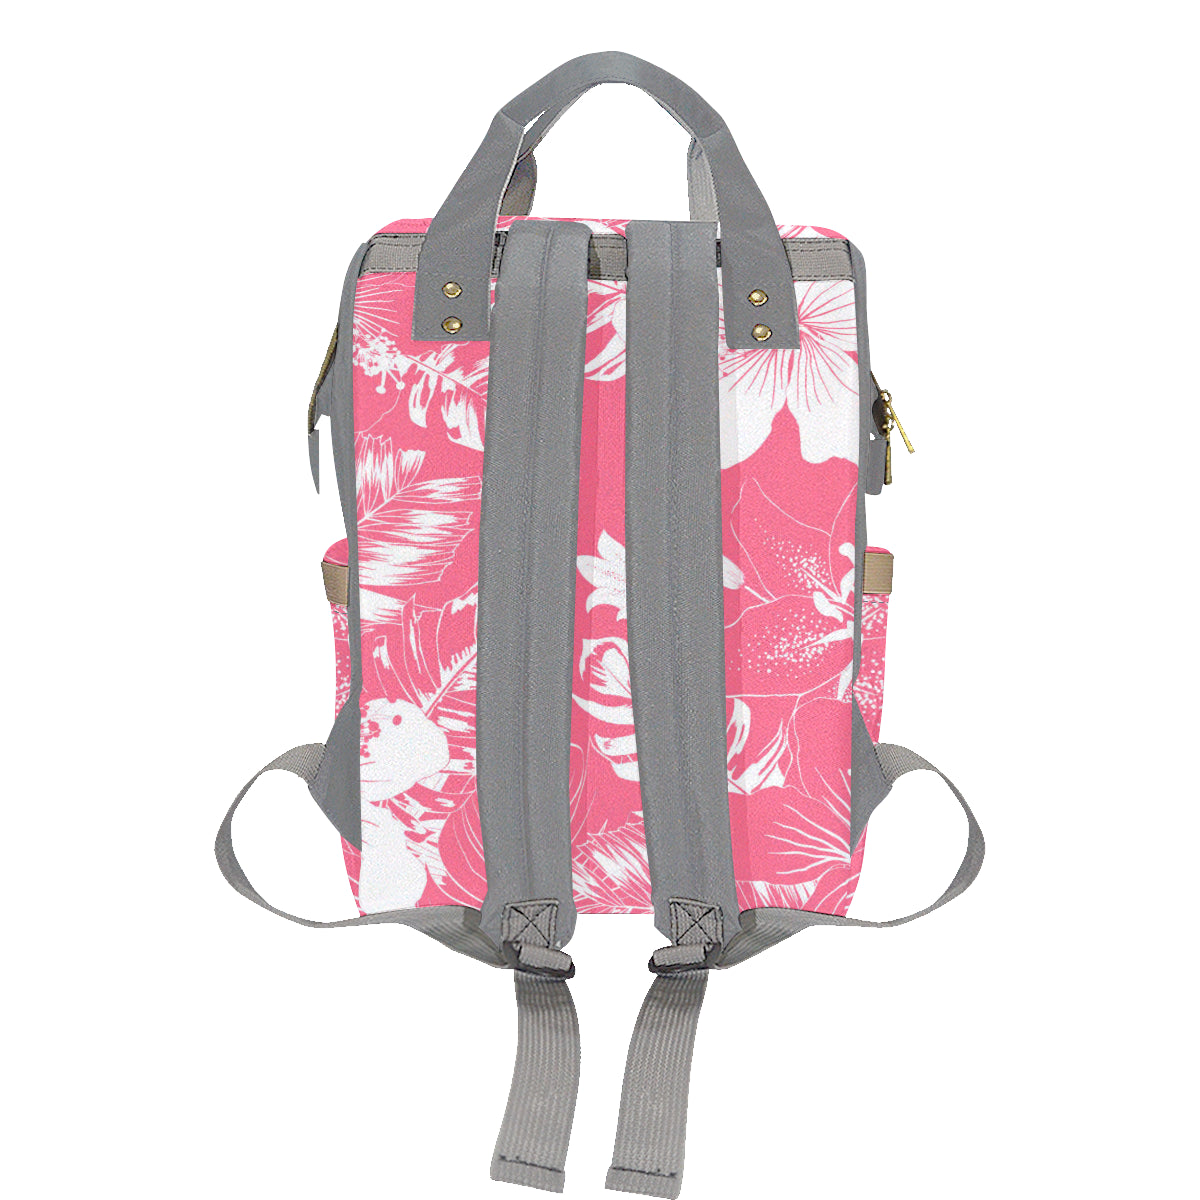 Guam Pink Floral Baby Diaper Backpack Bag